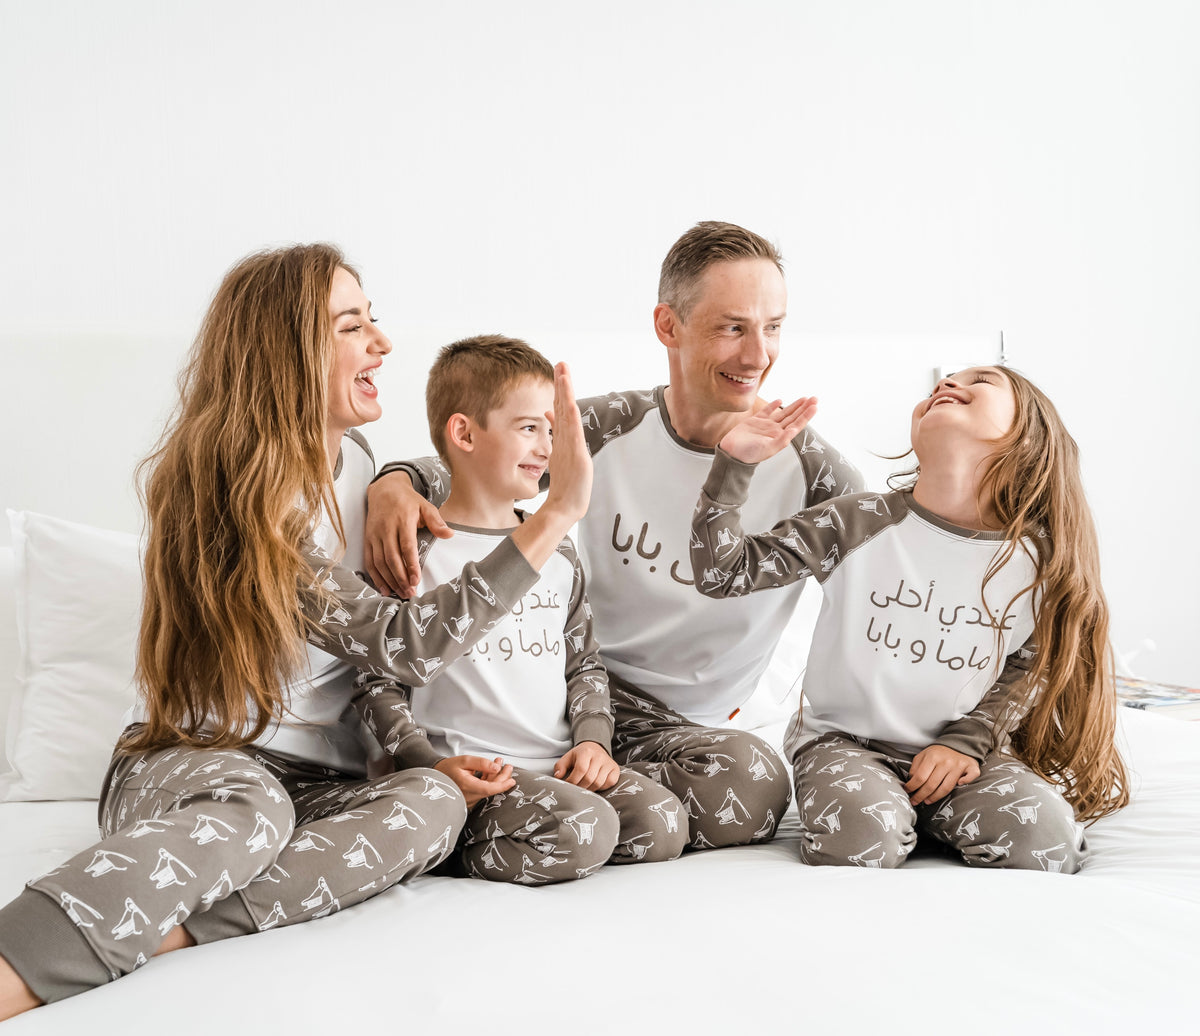 Organic Pajama Set for OLDER Kids - Baby Elephant Organic Wear